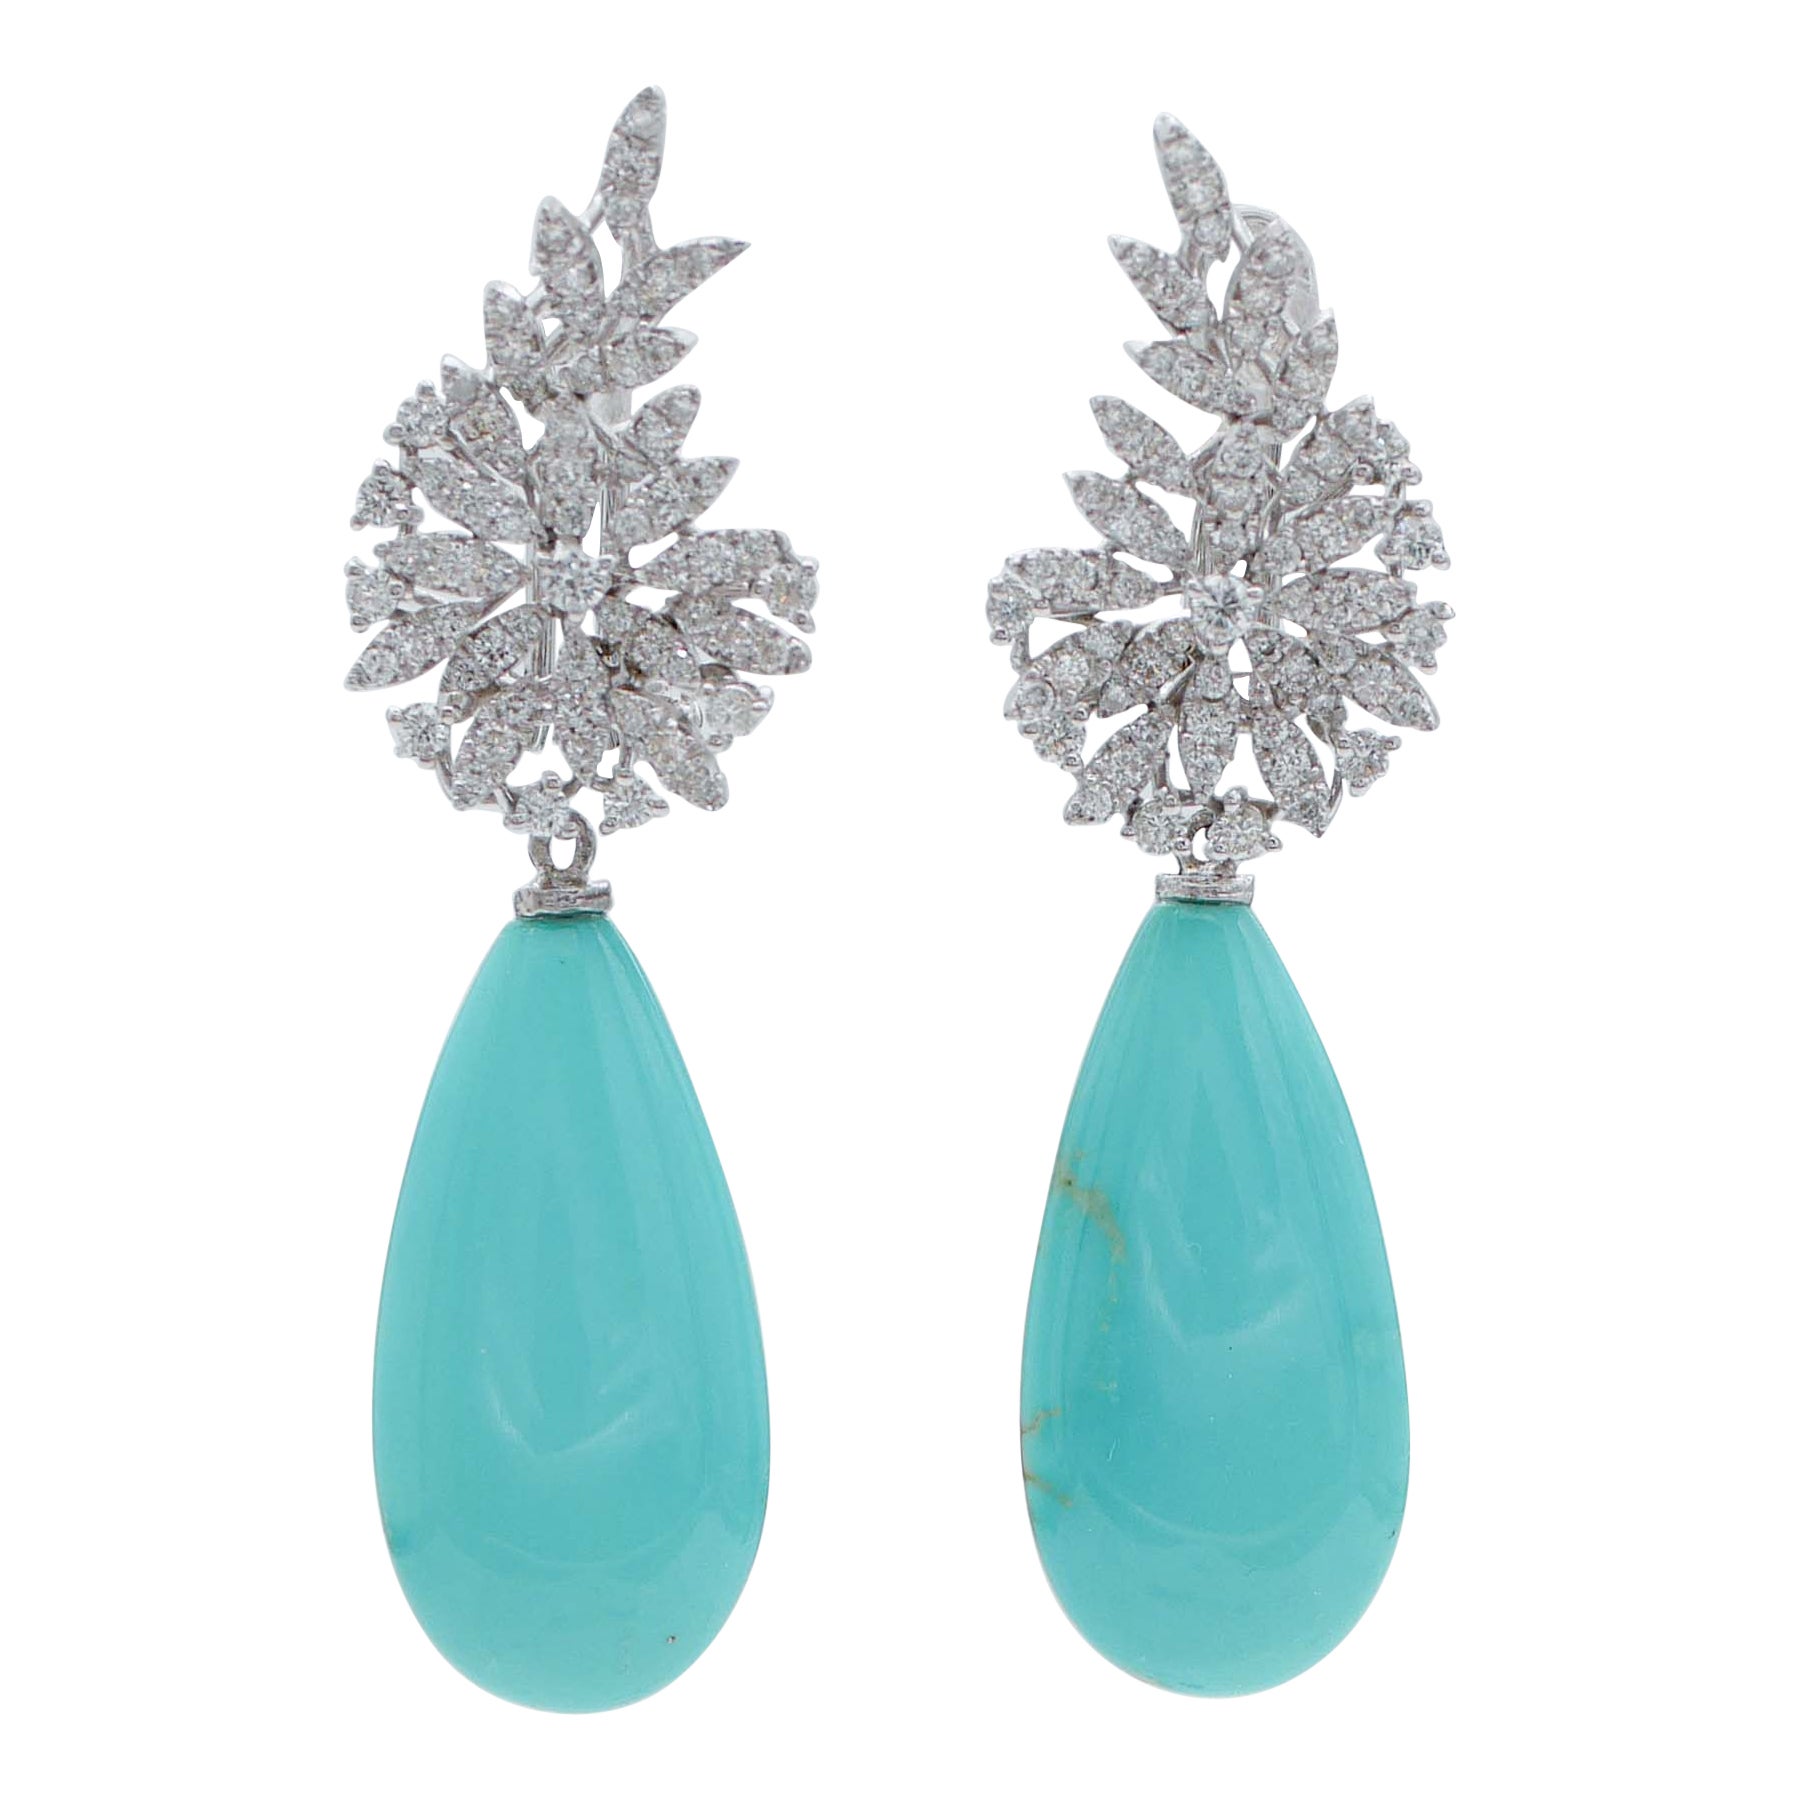 Turquoise, Diamonds, 14 Karat White Gold Earrings